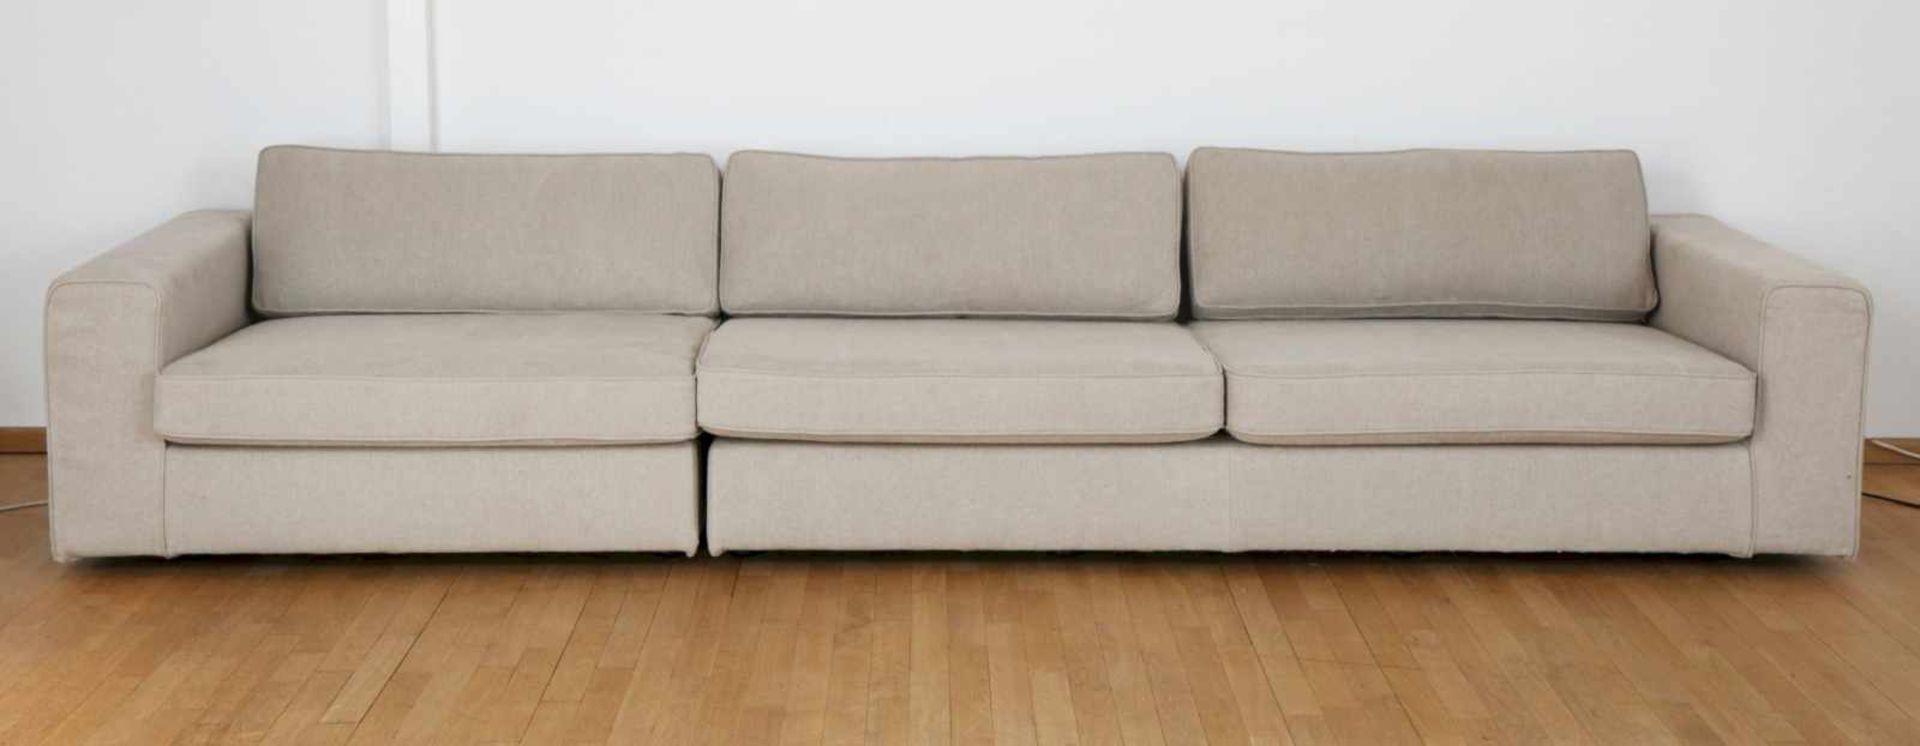 Großes JON EDWARDS 3-Sitzer Sofa ¨Denver¨strenge, eckige Form, neuer, heller Leinenbezug (Angelika